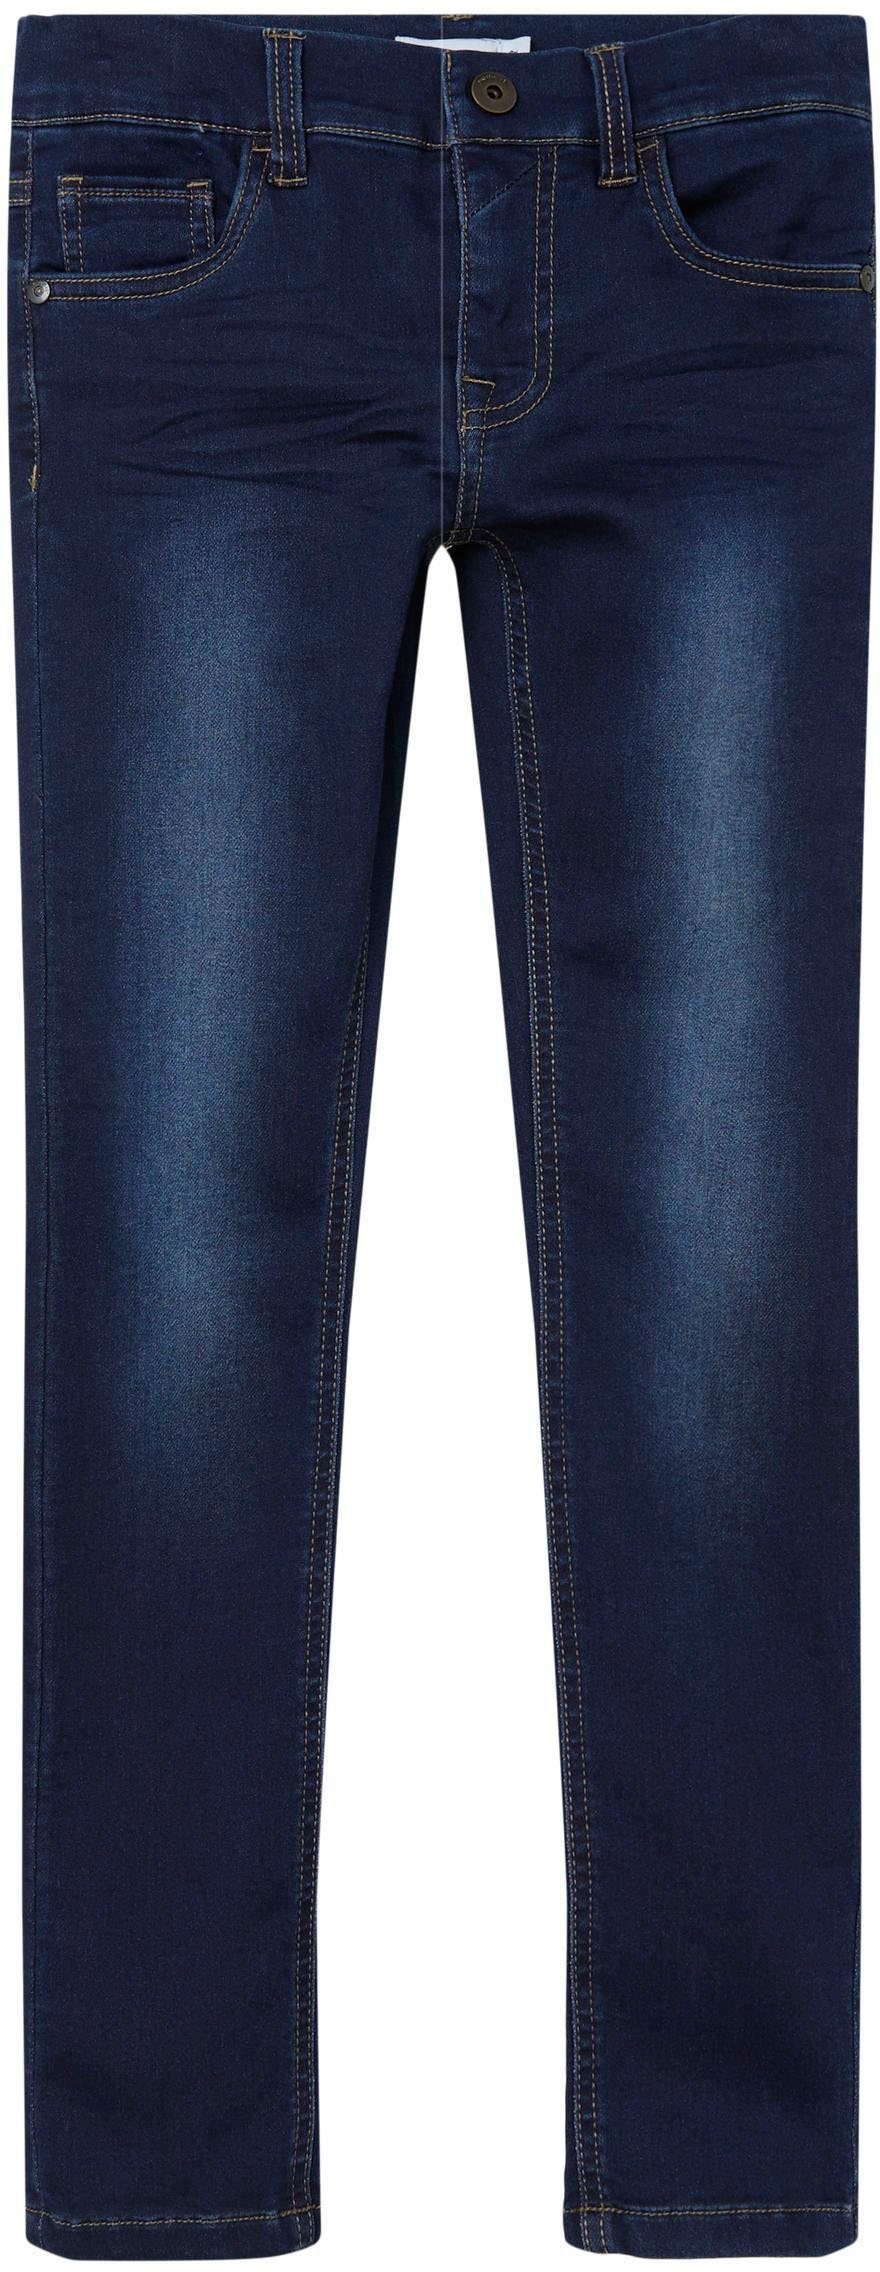 COR1 It Name SWE NKMTHEO DNMTHAYER blue Stretch-Jeans PANT denim dark